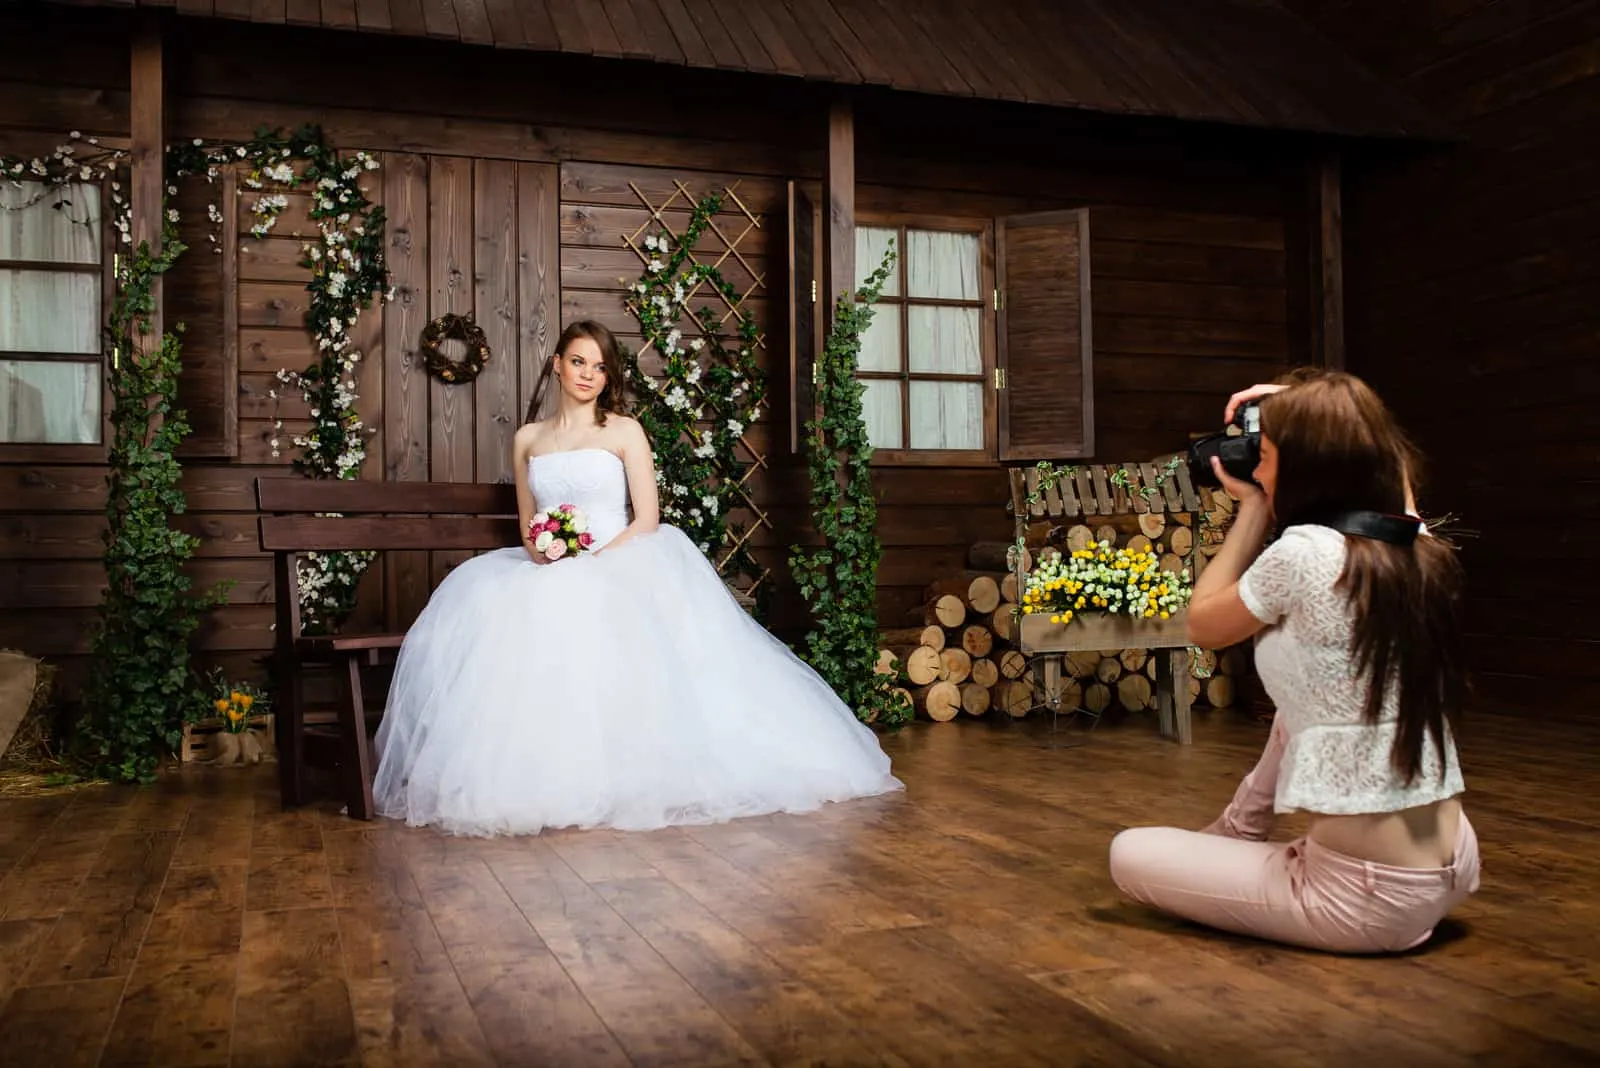 Fotografin fotografiert die Braut